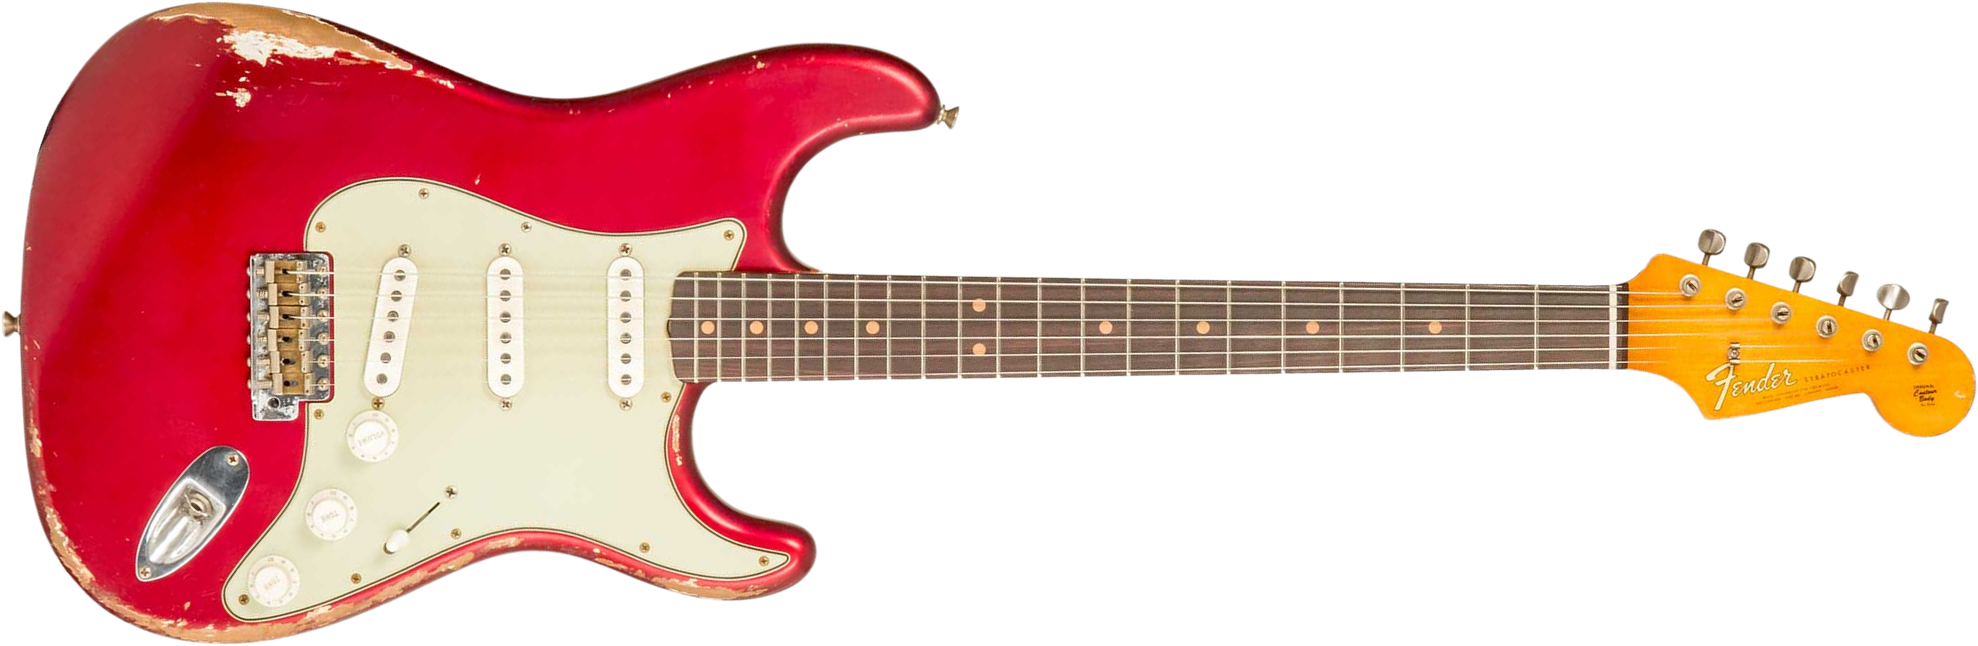 Fender Custom Shop Strat 1964 Masterbuilt P.waller 3s Trem Rw #r129130 - Heavy Relic Candy Apple Red - Guitarra eléctrica con forma de str. - Main pic